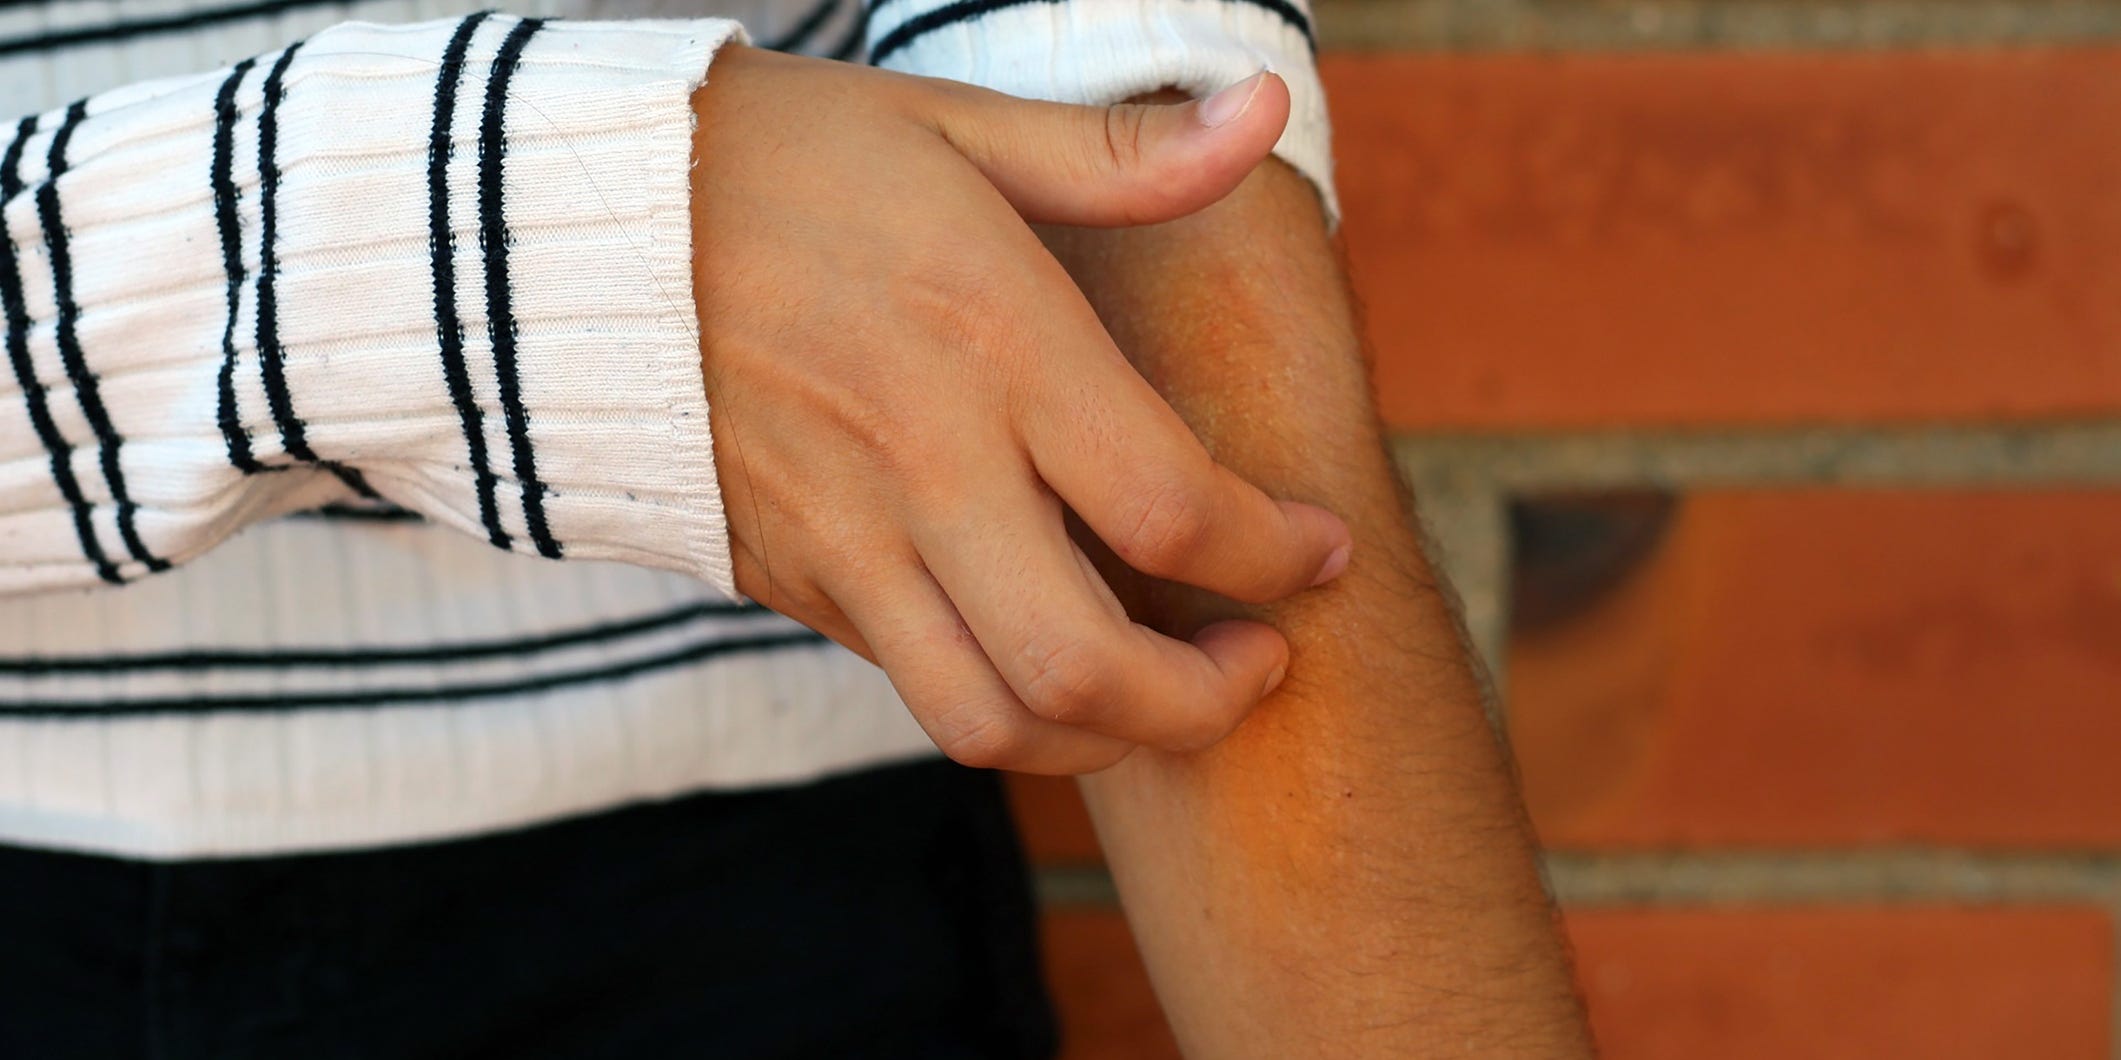 itchy rash on the elbow